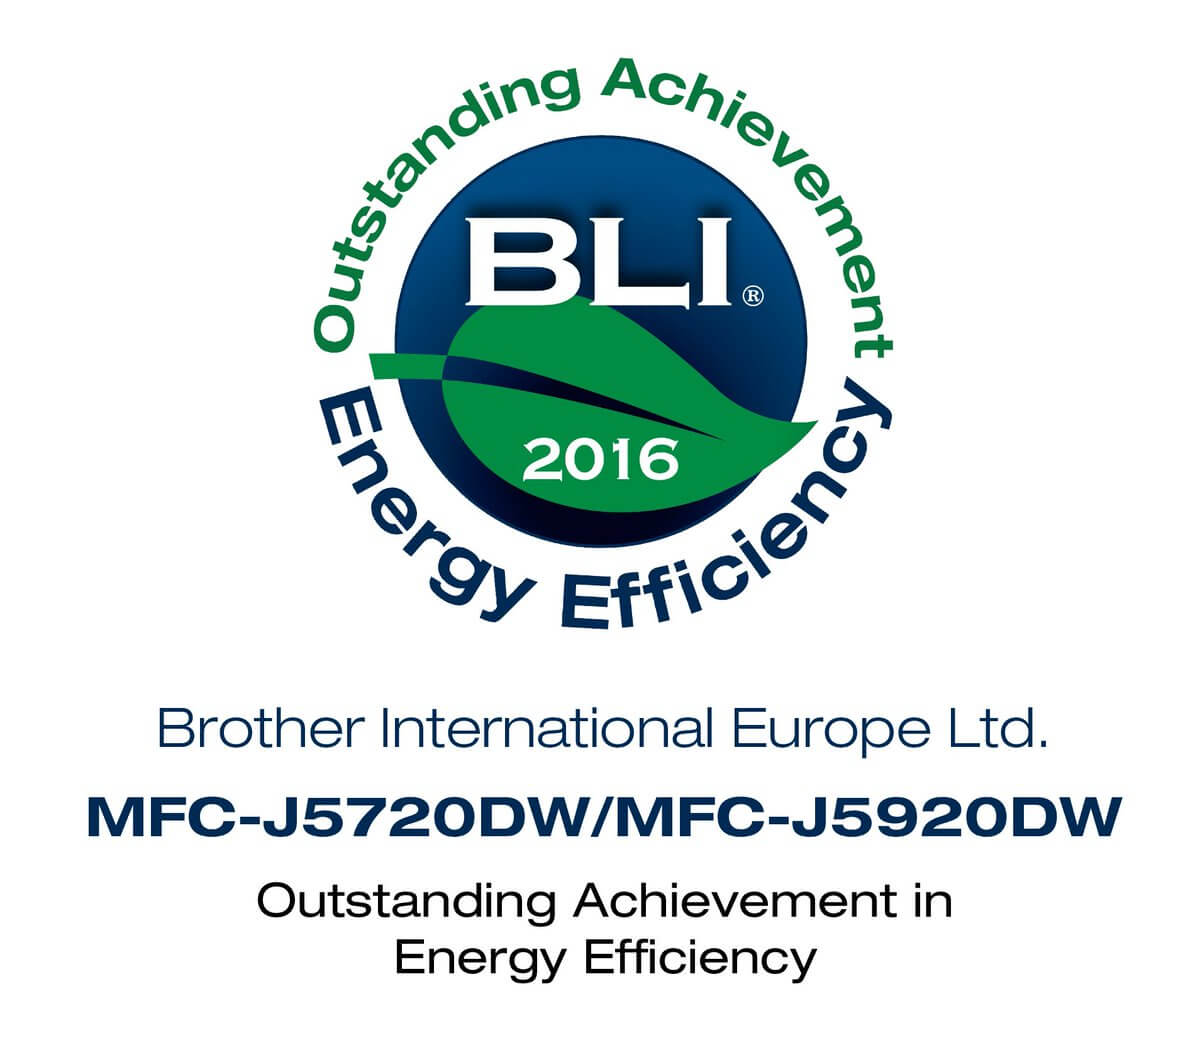 BLI Energy Efficiency 2016 award